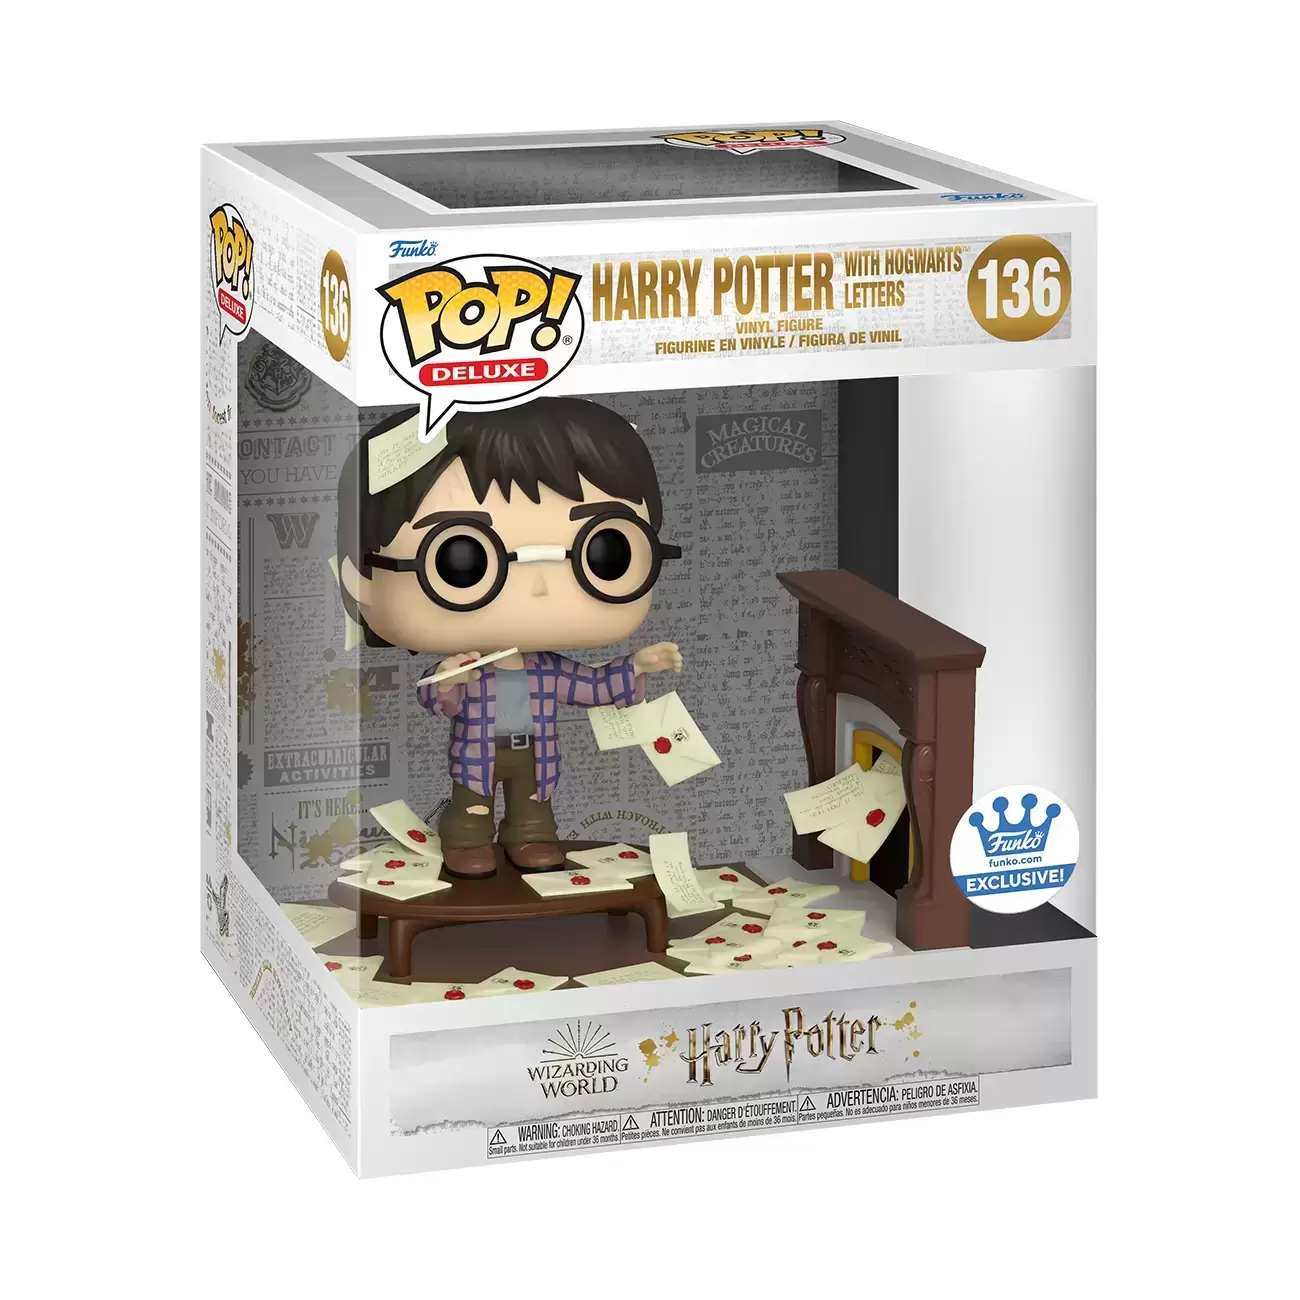 POP! Harry Potter - Harry Potter with Hogwarts Letters